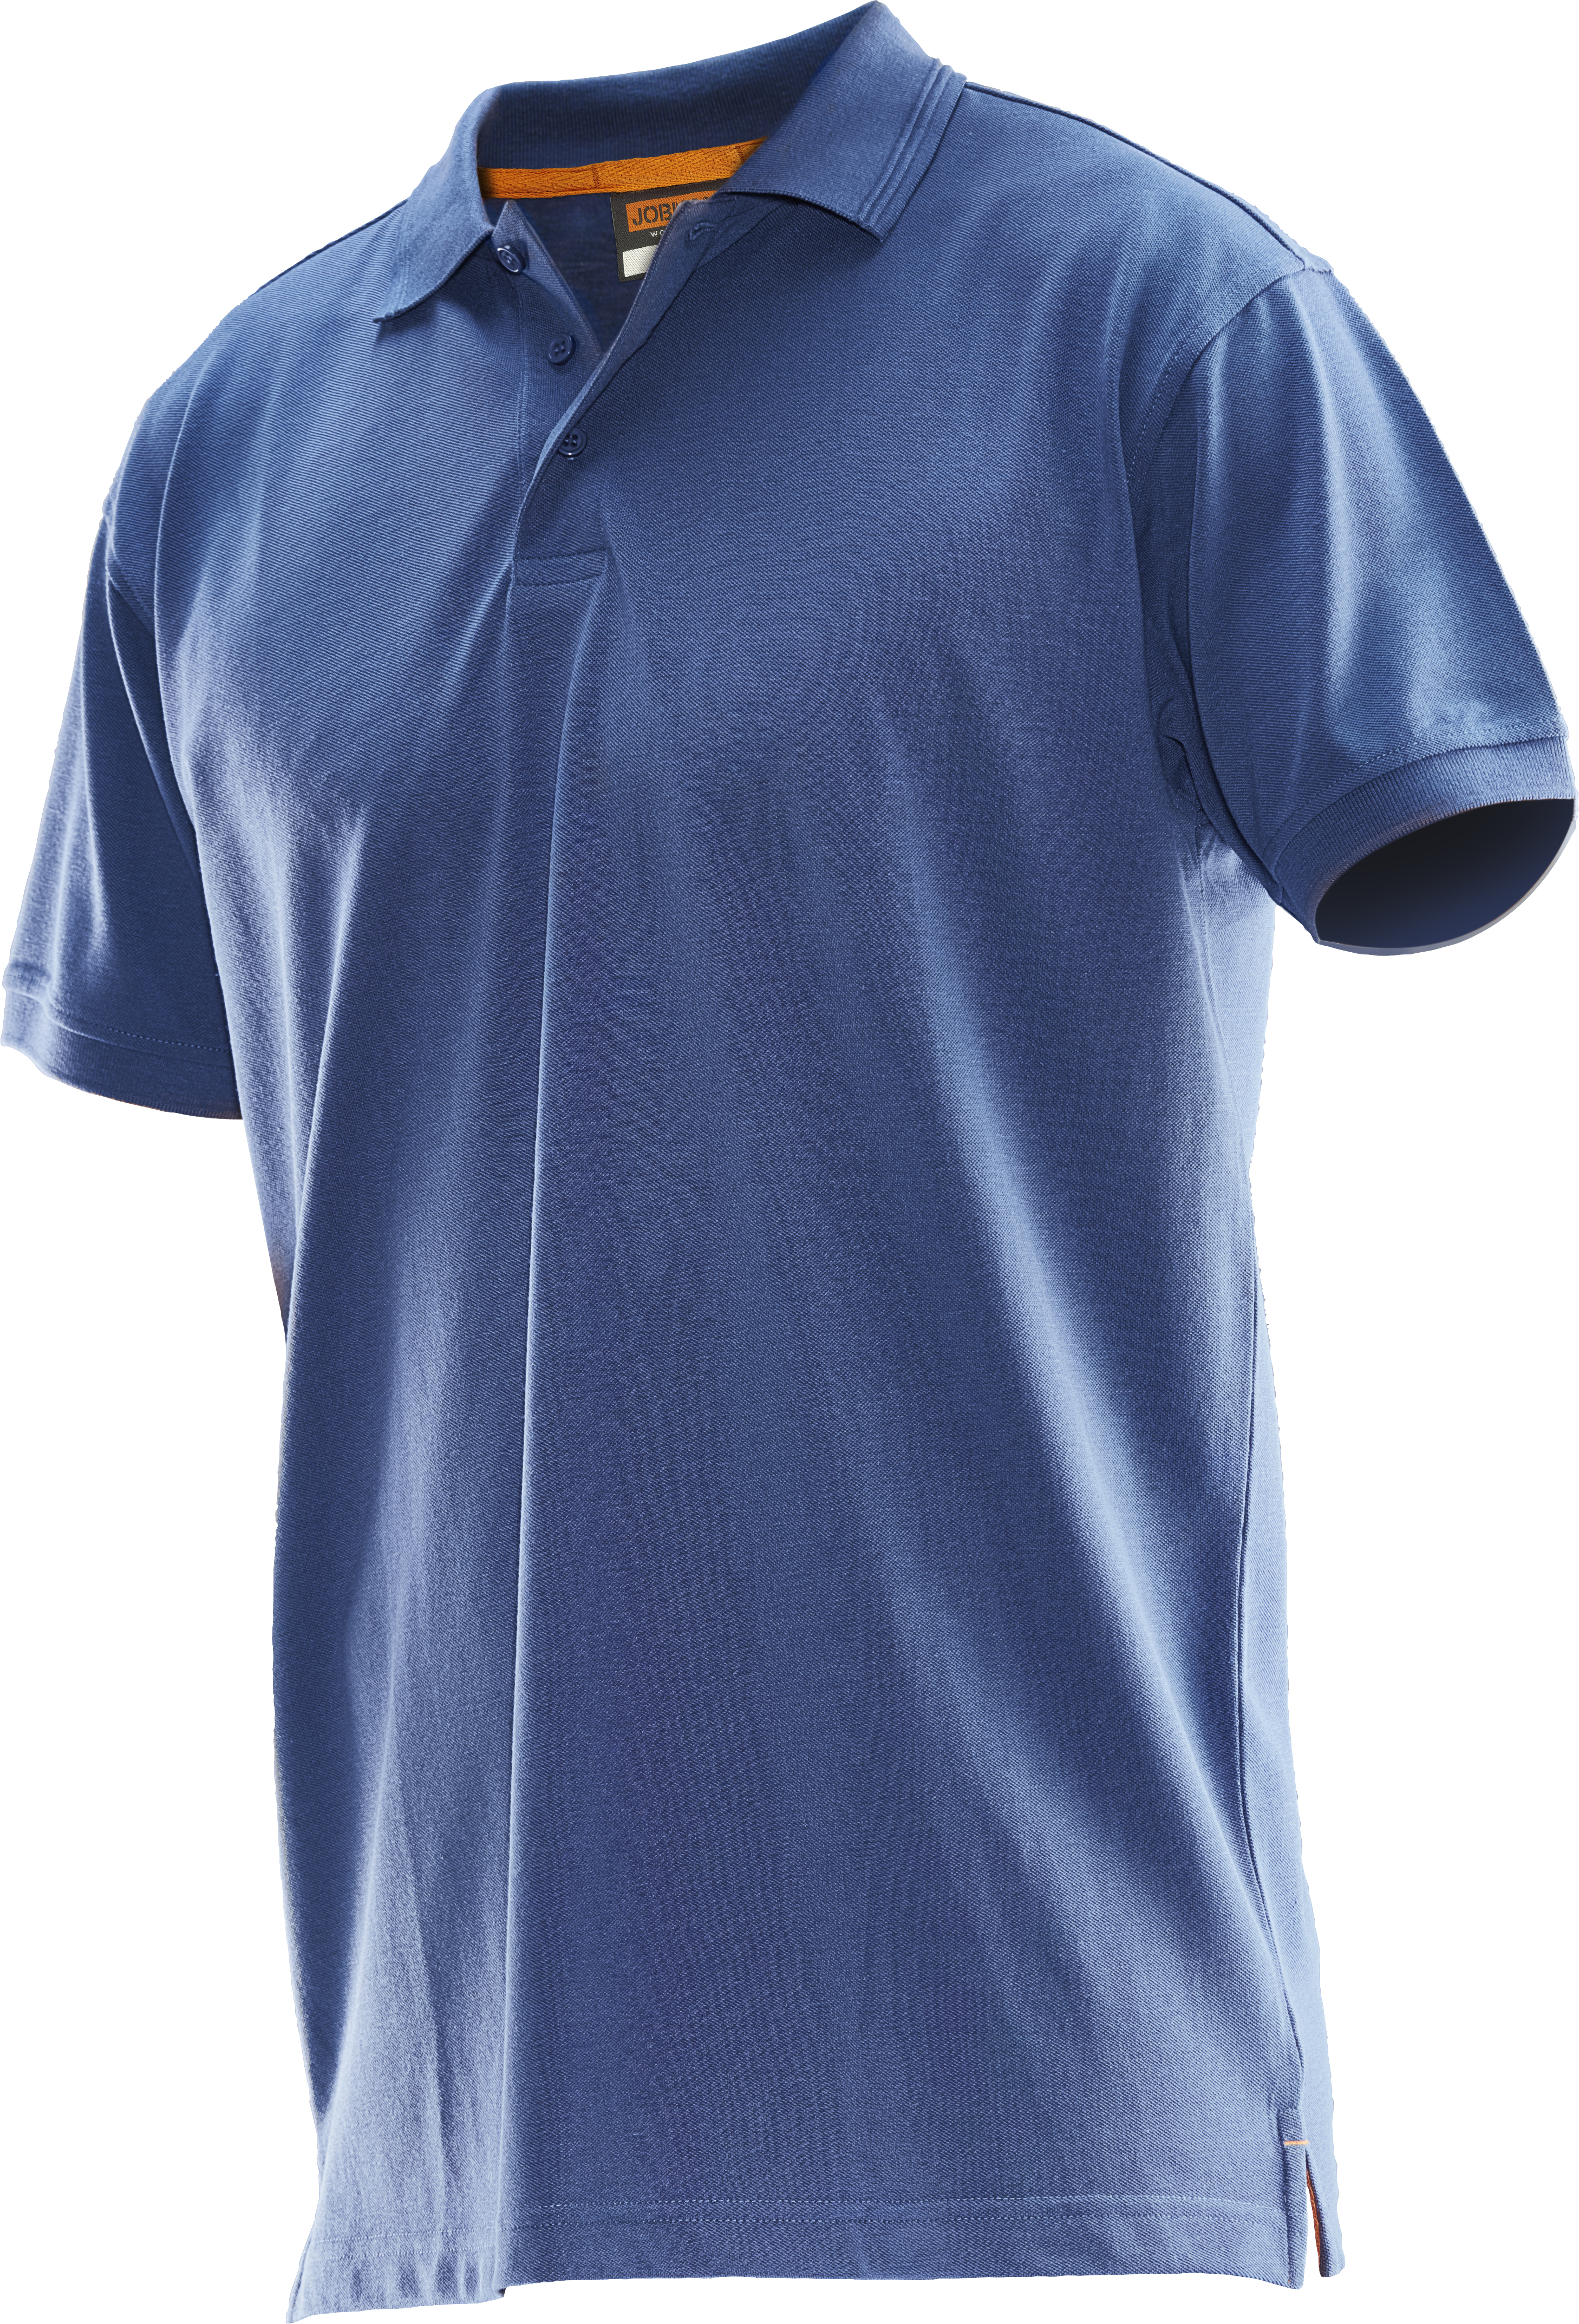 5564 T-shirt polo S bleu ciel